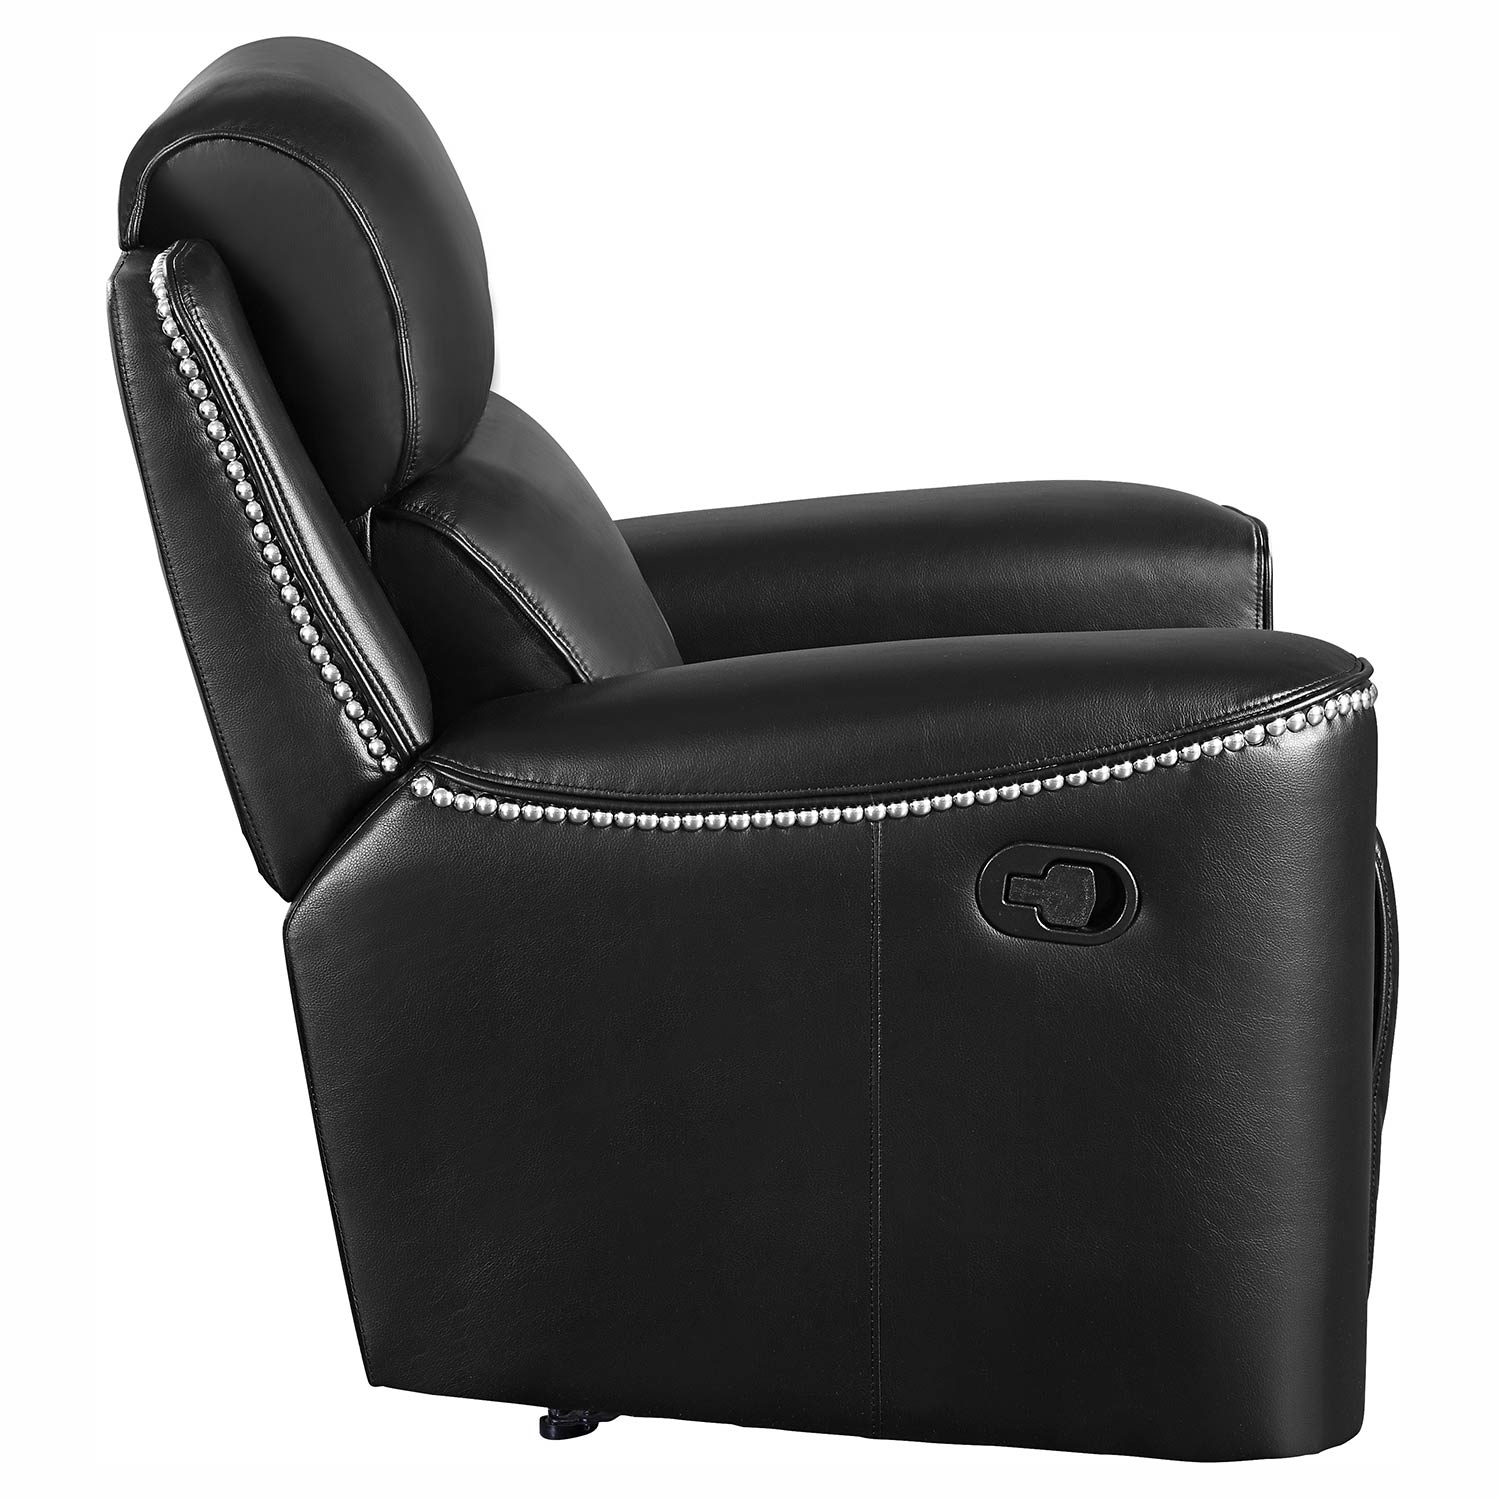 Homelegance Altair Reclining Chair - Black